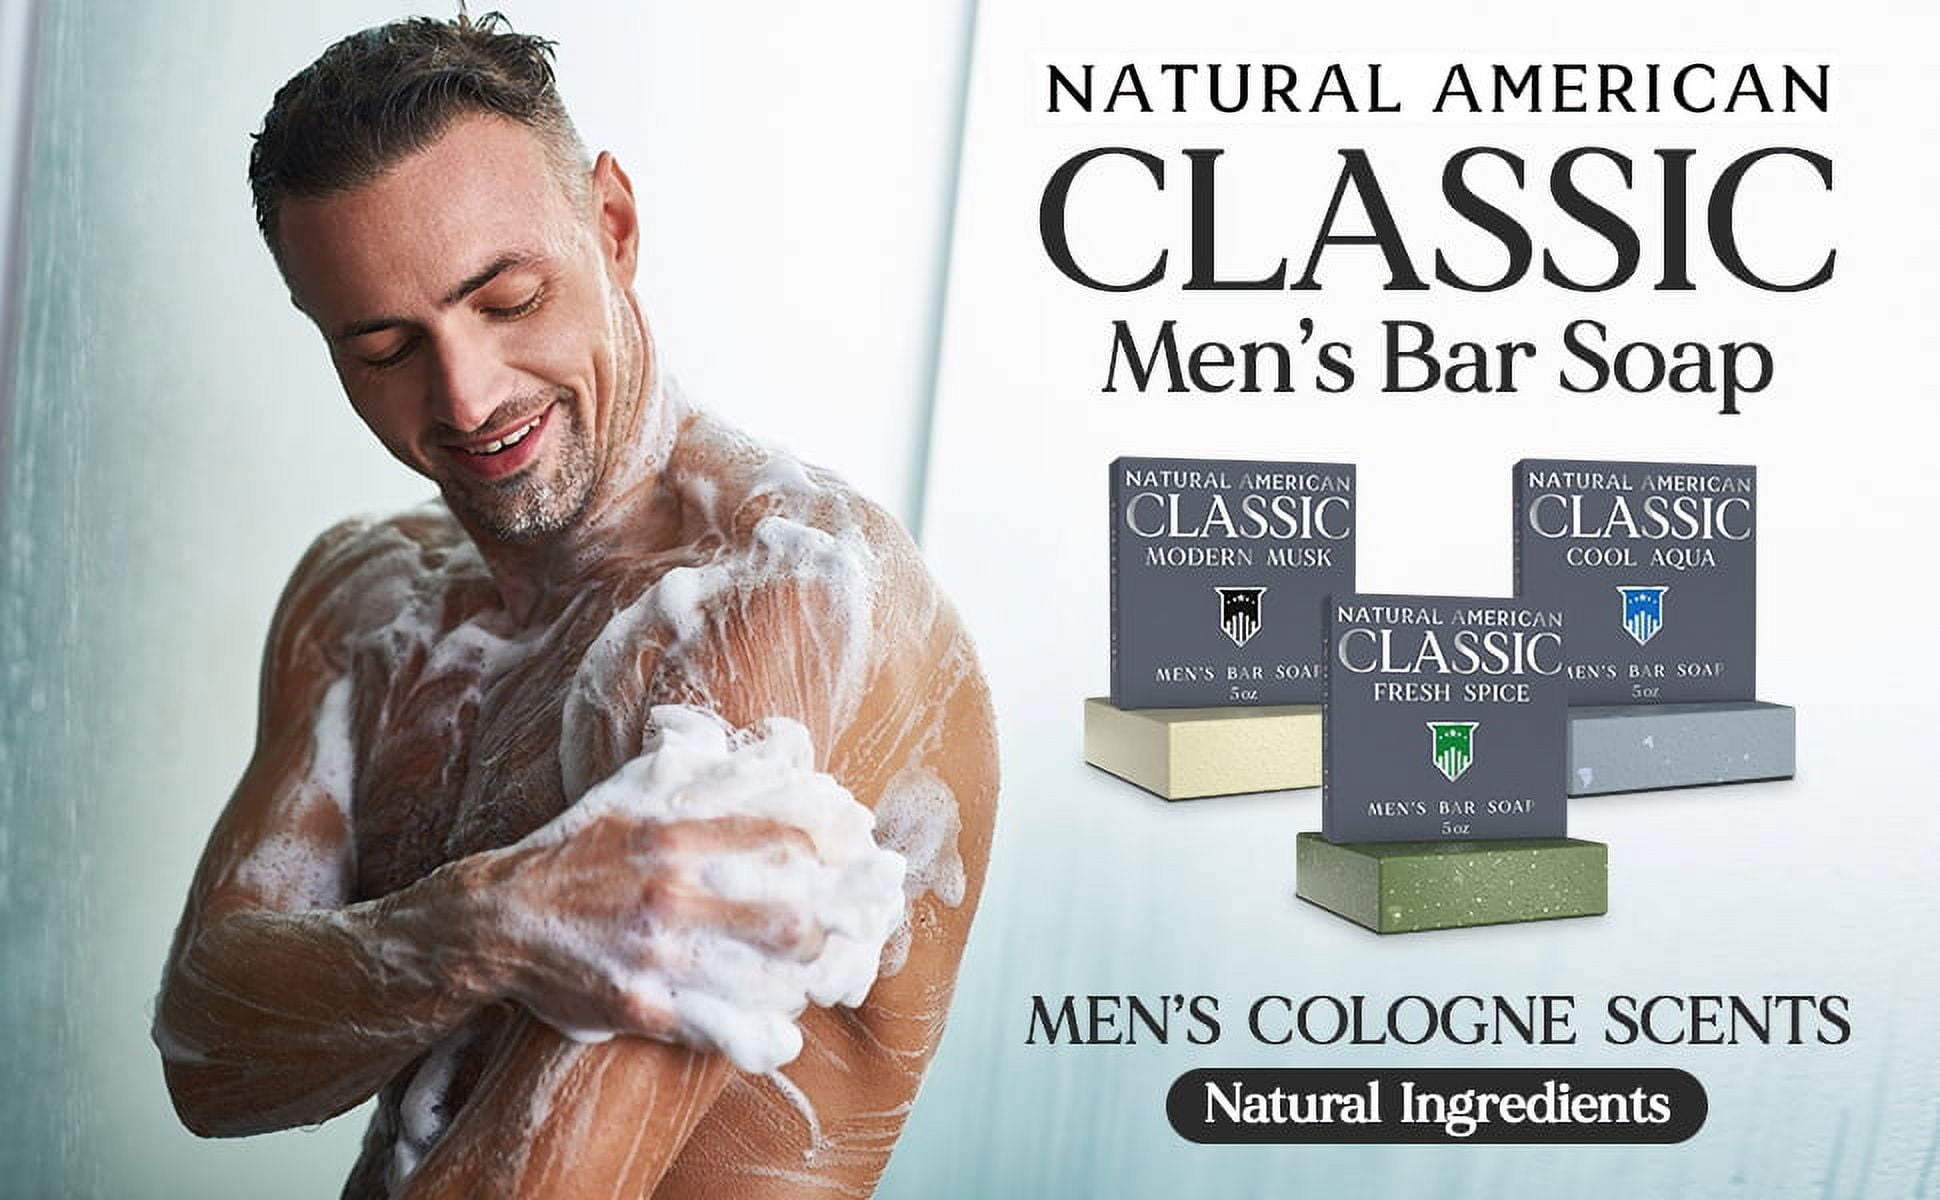 FUBAR Natural Mens Soap, handmade, masculine, veteran owned, cold processed  – Patriot Mens Company